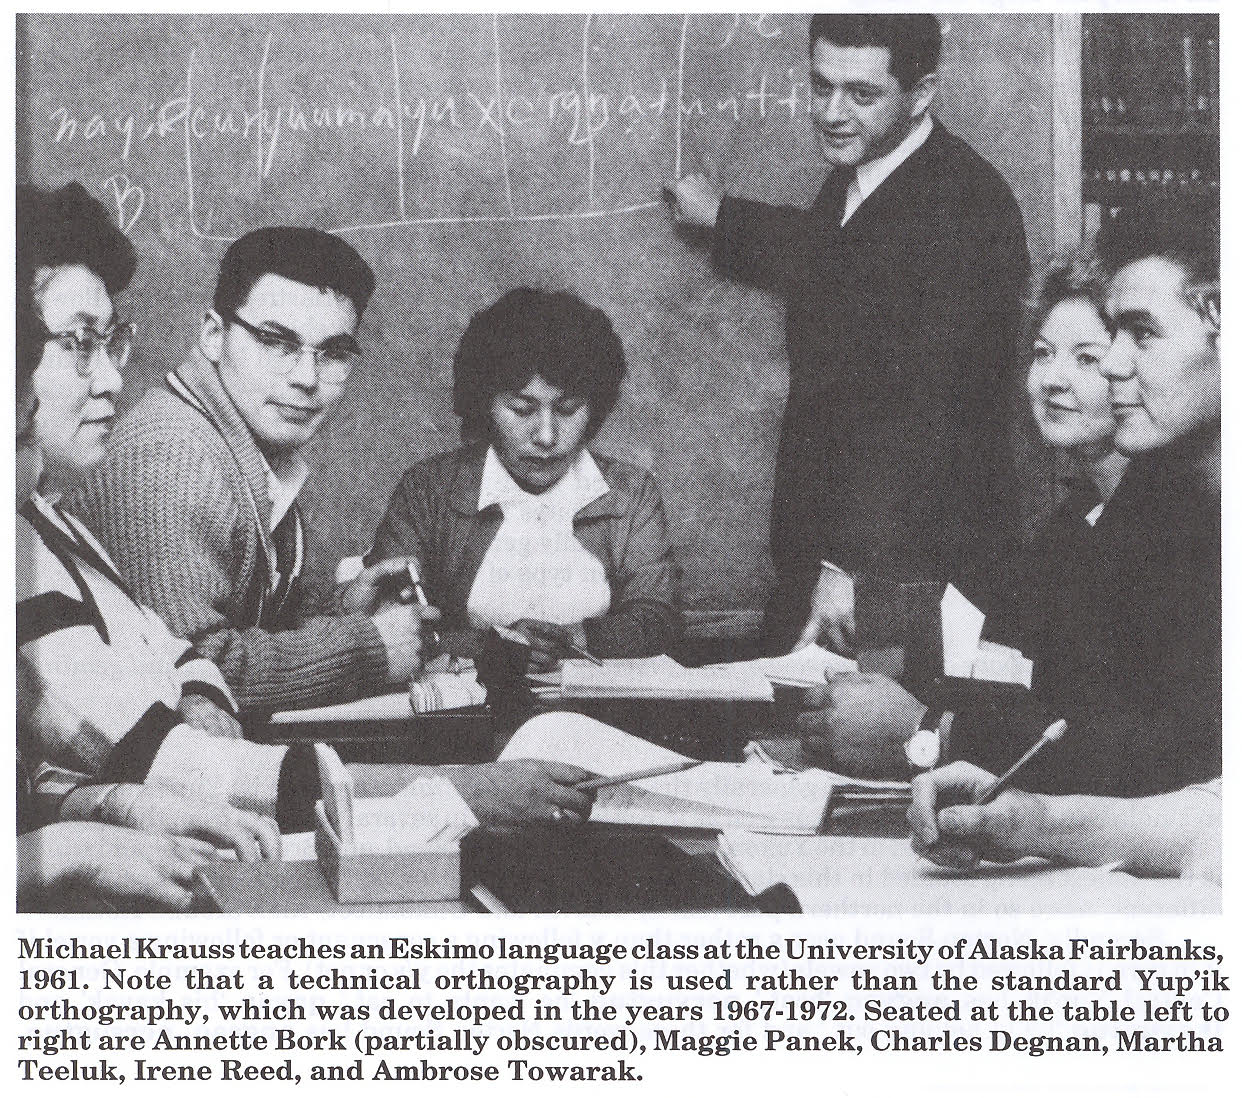 Micheal Krauss teaches language class at UAF in 1961.